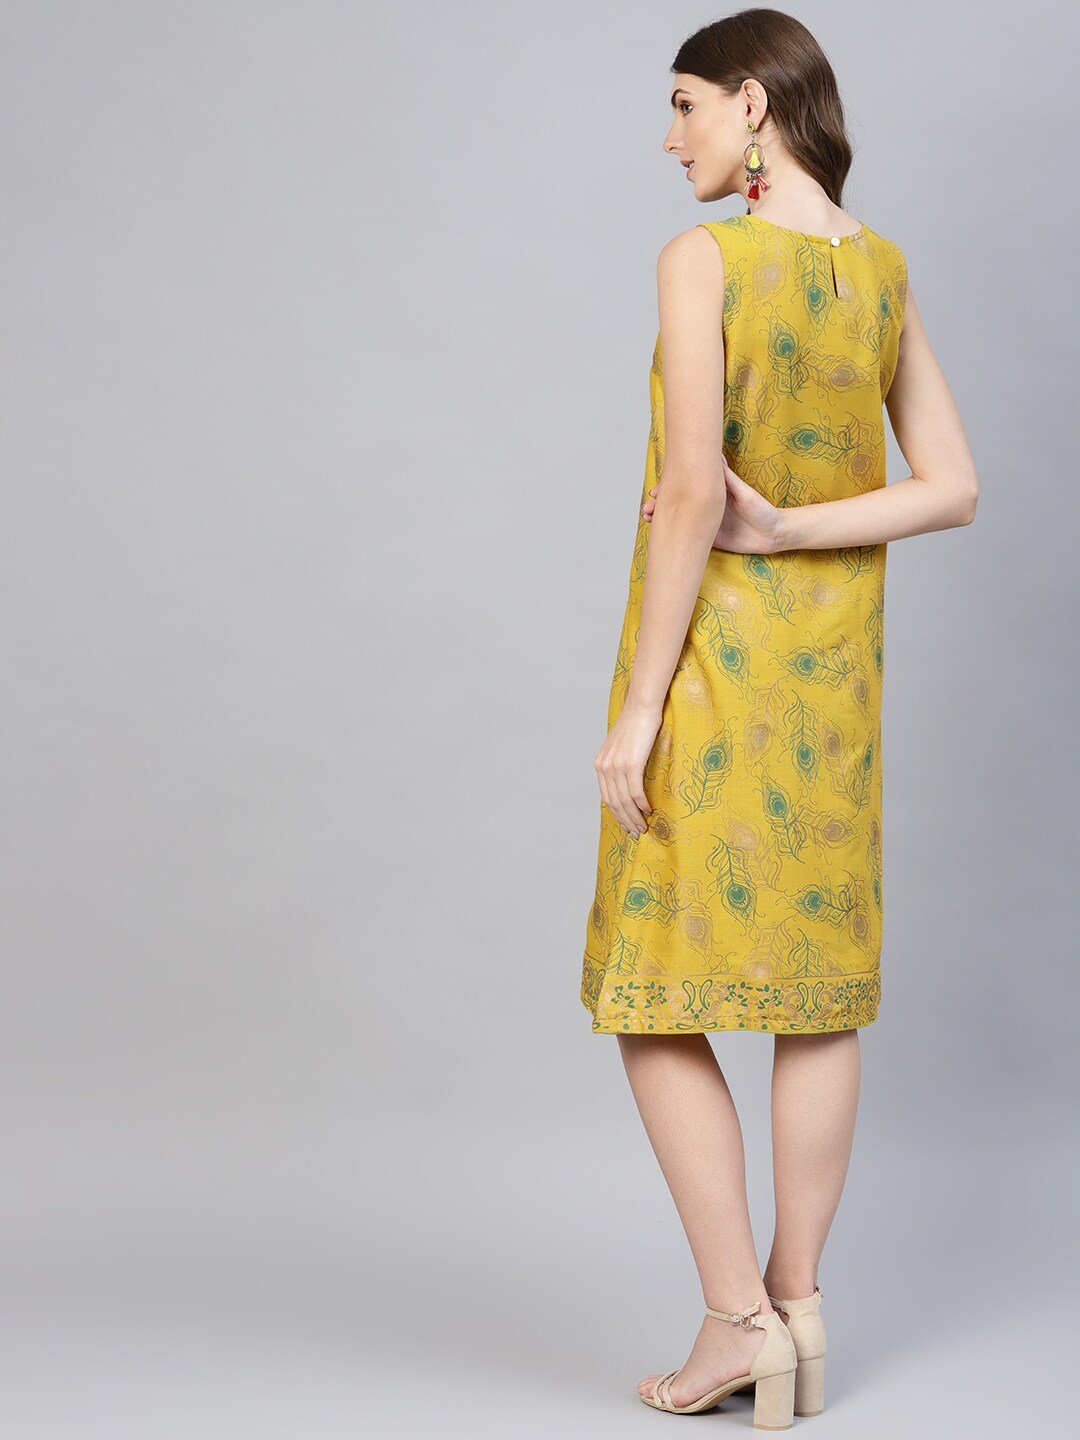 Women's  Mustard Yellow & Green Printed A-Line Dress - AKS